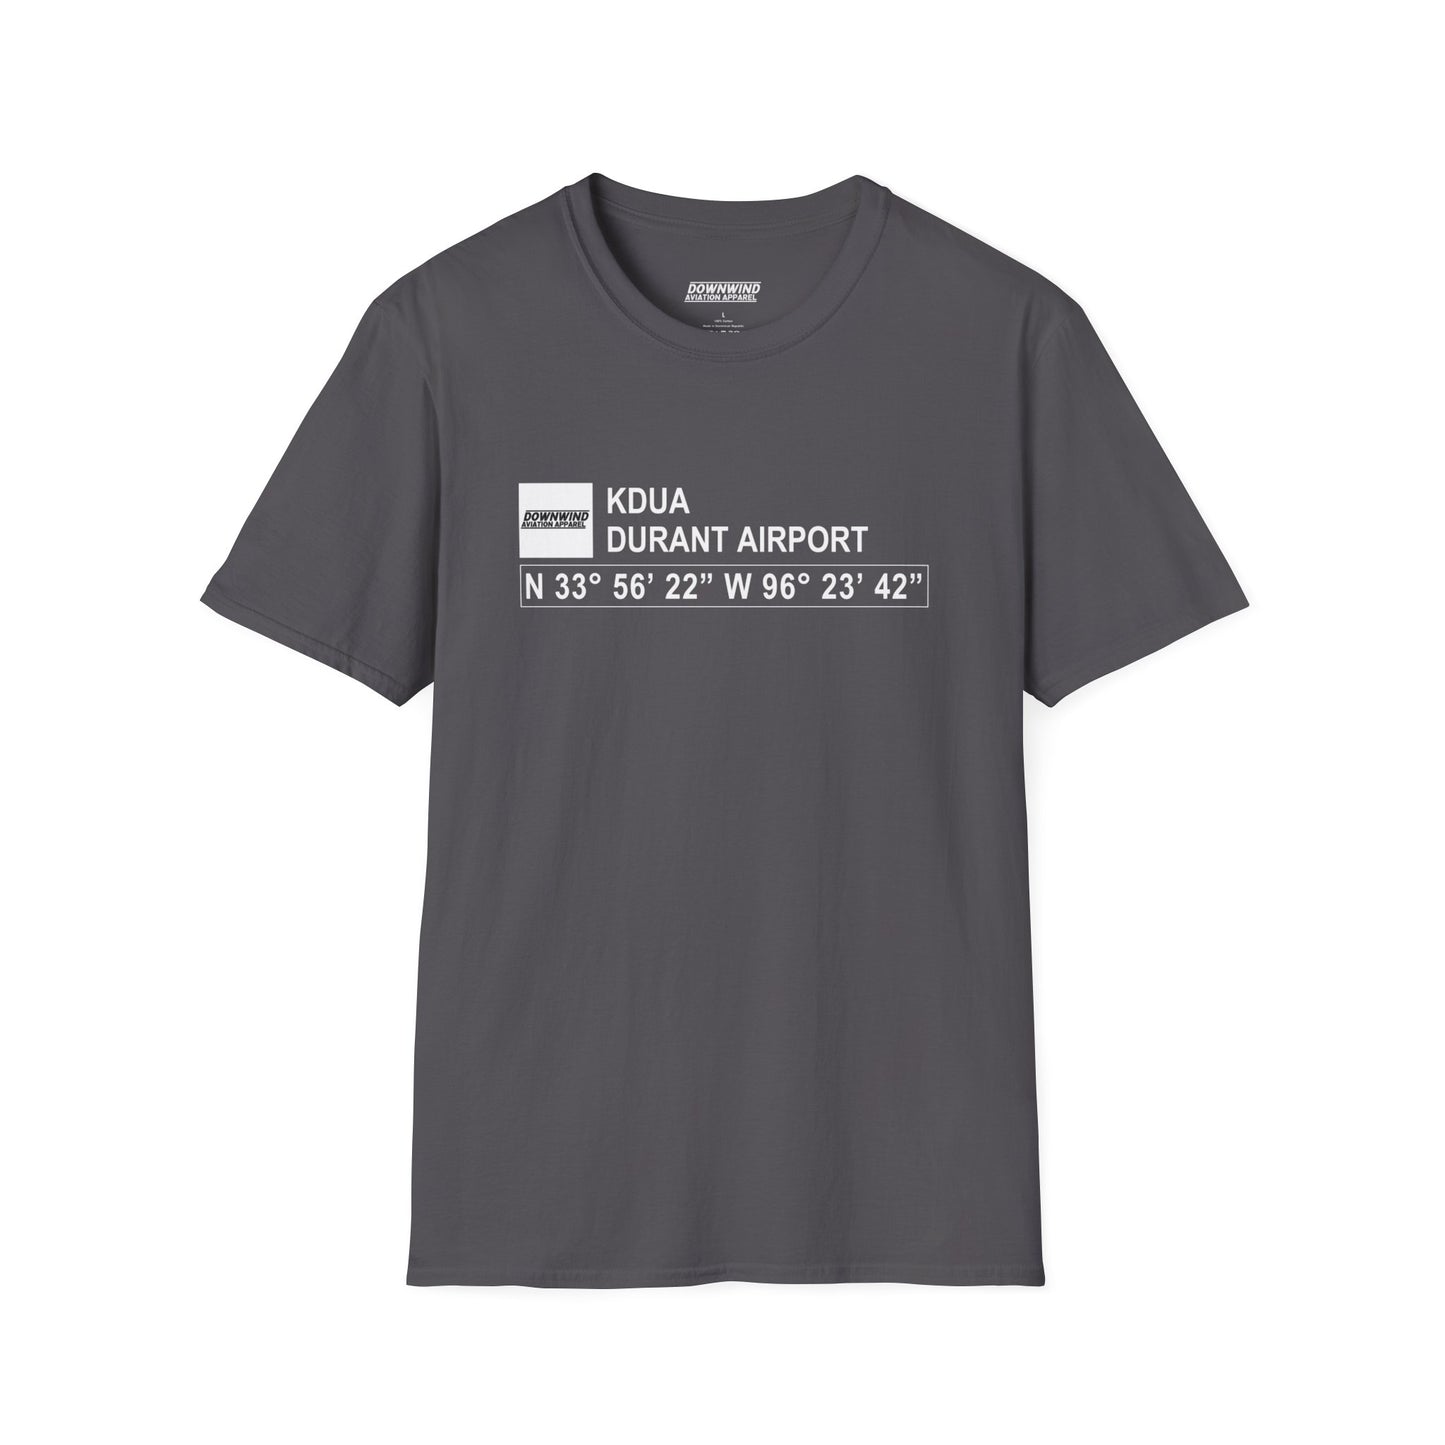 KDUA / Durant Airport T-Shirt